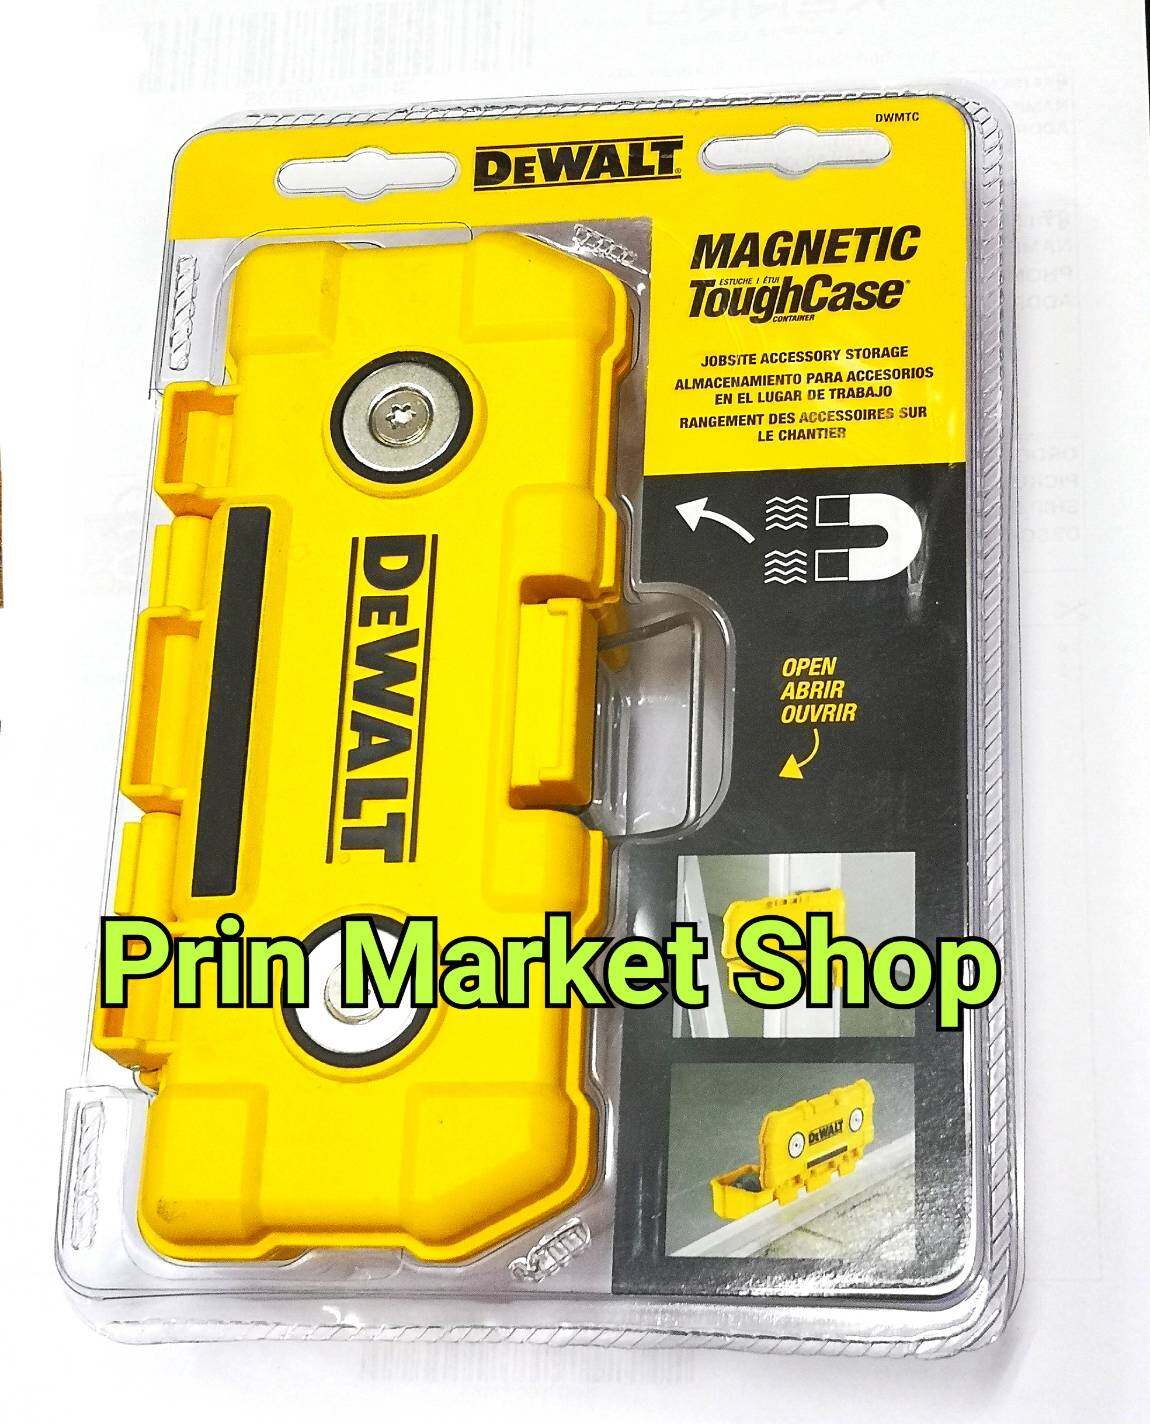 DeWalt กล่องเครื่องมือ แม่เหล็ก DWMTC #6686570  Magnetic Tough Case ใส่ น๊อต สกรู ดอกสว่าน และ อุปกรณ์งานช่างชนิดต่างๆ